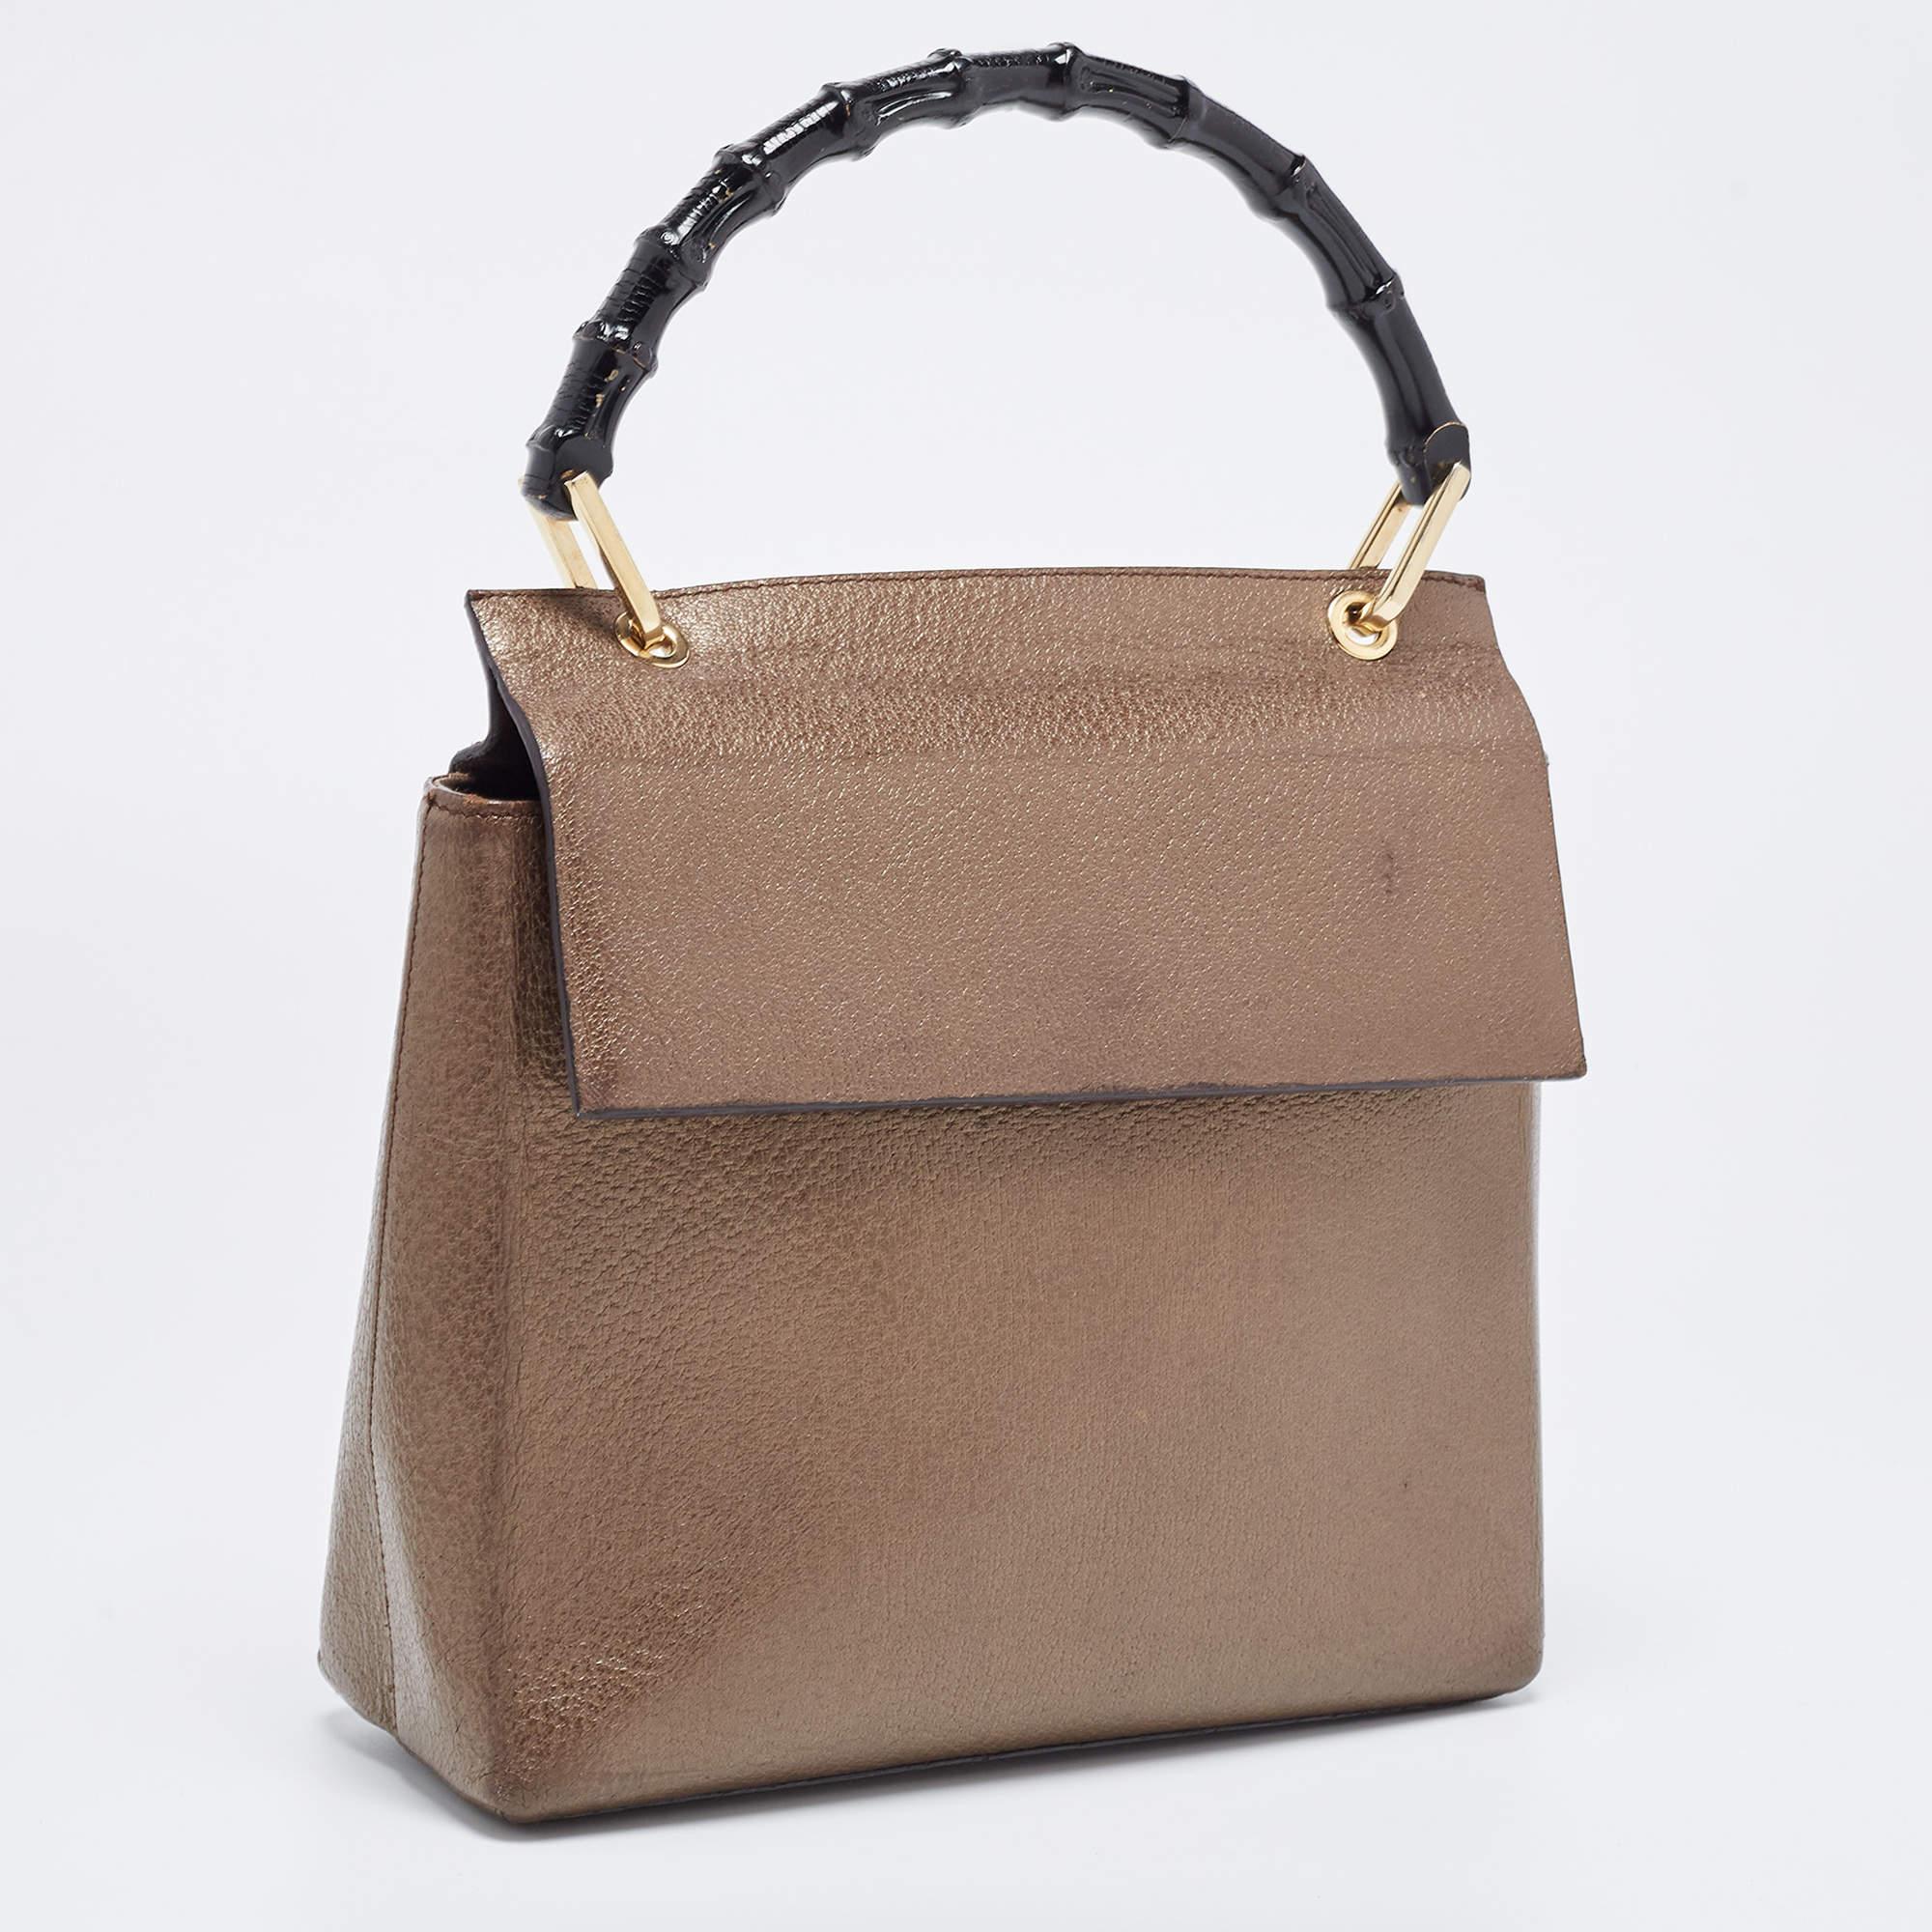 Gucci Bronze Leather Bamboo Flap Top Handle Bag In Good Condition For Sale In Dubai, Al Qouz 2